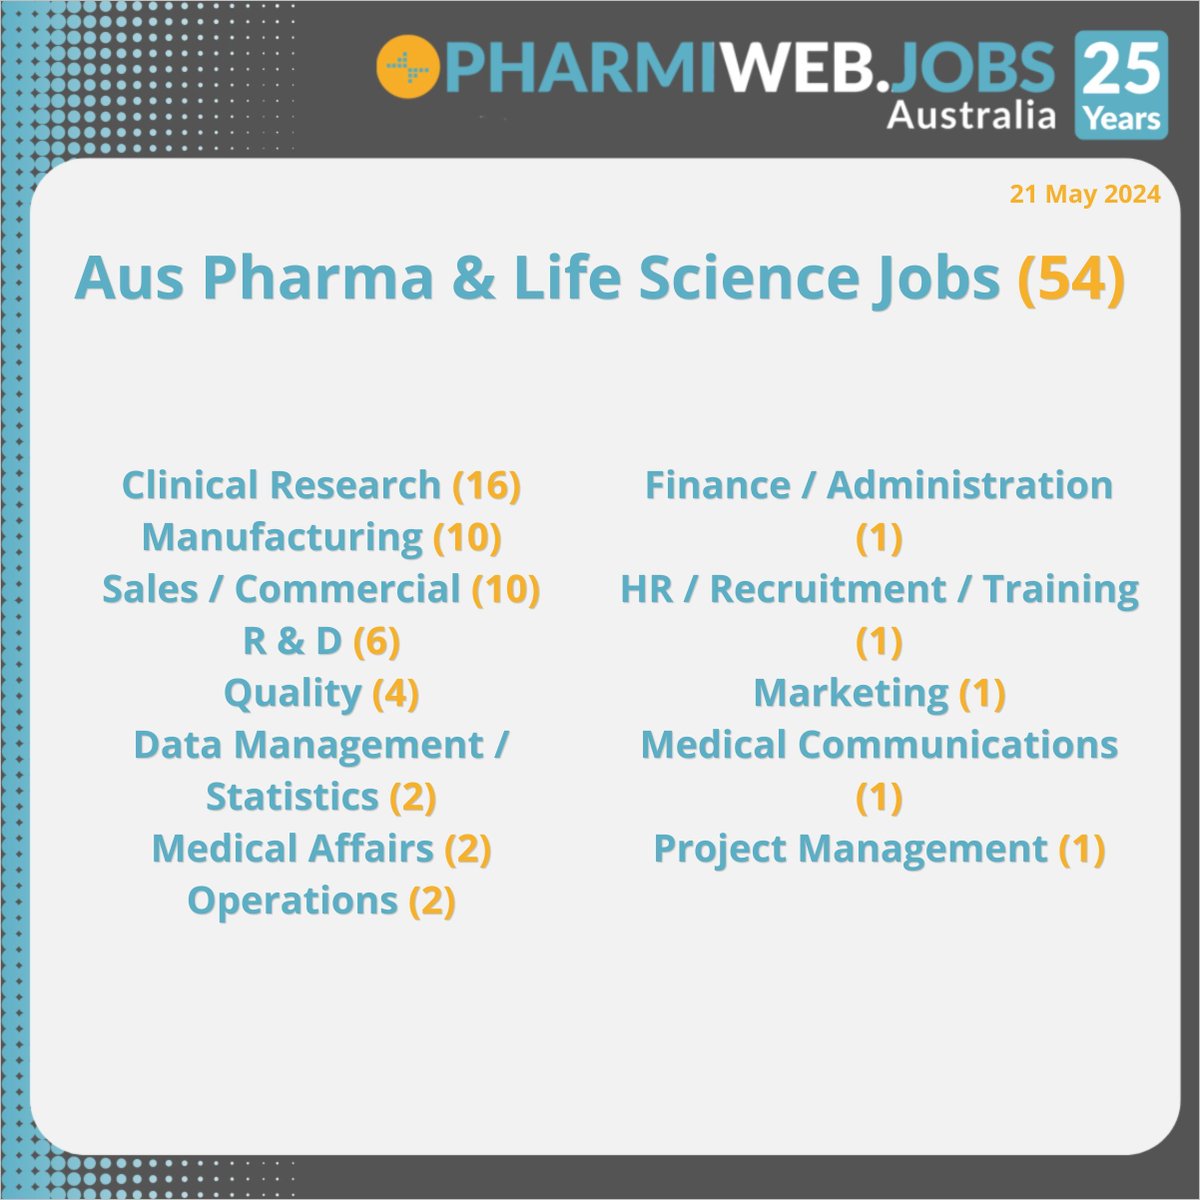 54 Pharma & Life Science Jobs Today
Search Now - phrmwb.com/3V4Ssid

Register & Upload Your CV Now! phrmwb.com/3WMgCiH

#Pharma #pharmaceuticals #Biotech #ClinicalResearch #LifeSciences #MedicalDevices #Biotechnology #PharmaJobs #healthcare #jobs #Australia #PharmiWeb